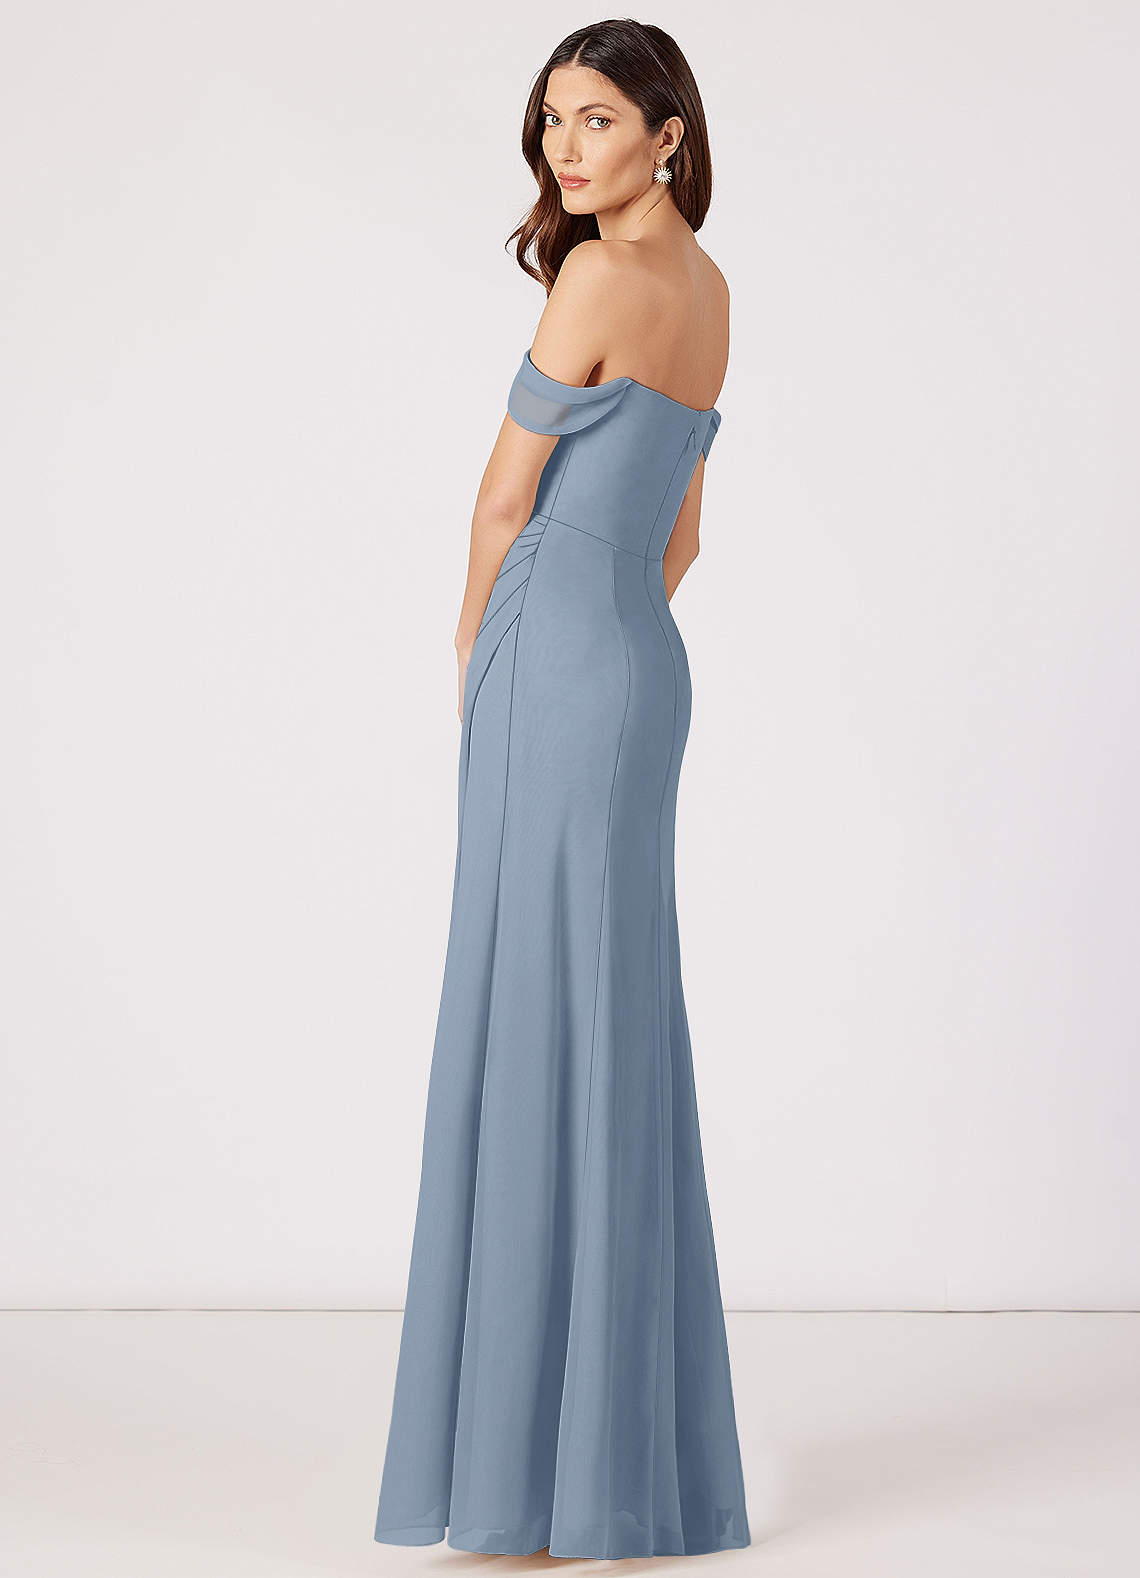 Azazie Jordyn Bridesmaid Dresses A-Line Off the Shoulder Chiffon Floor-Length Dress image1